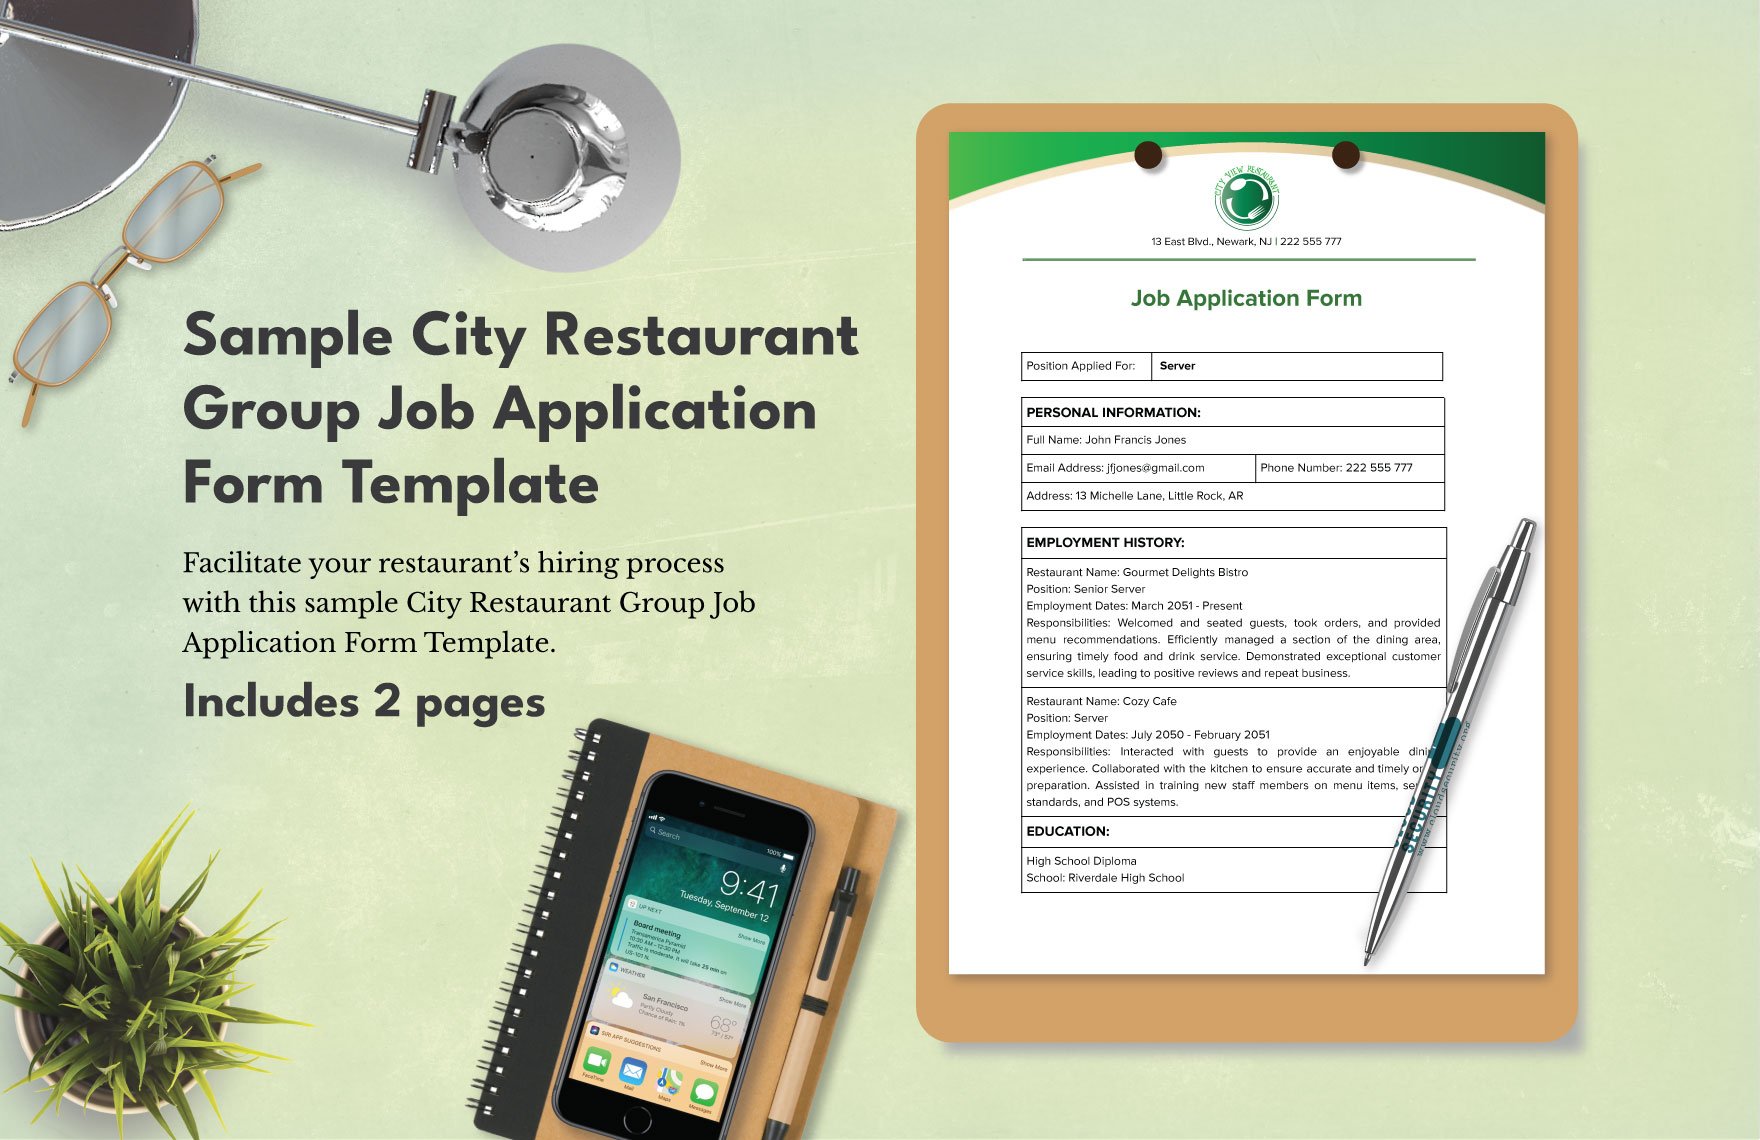 Sample City Restaurant Group Job Application Form Template